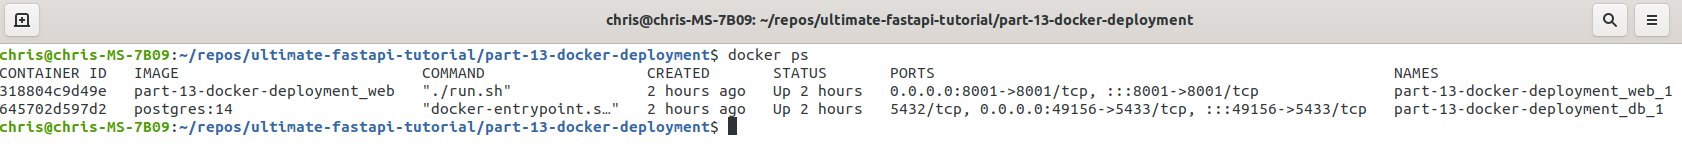 Dockerized FastAPI and PostgreSQL containers